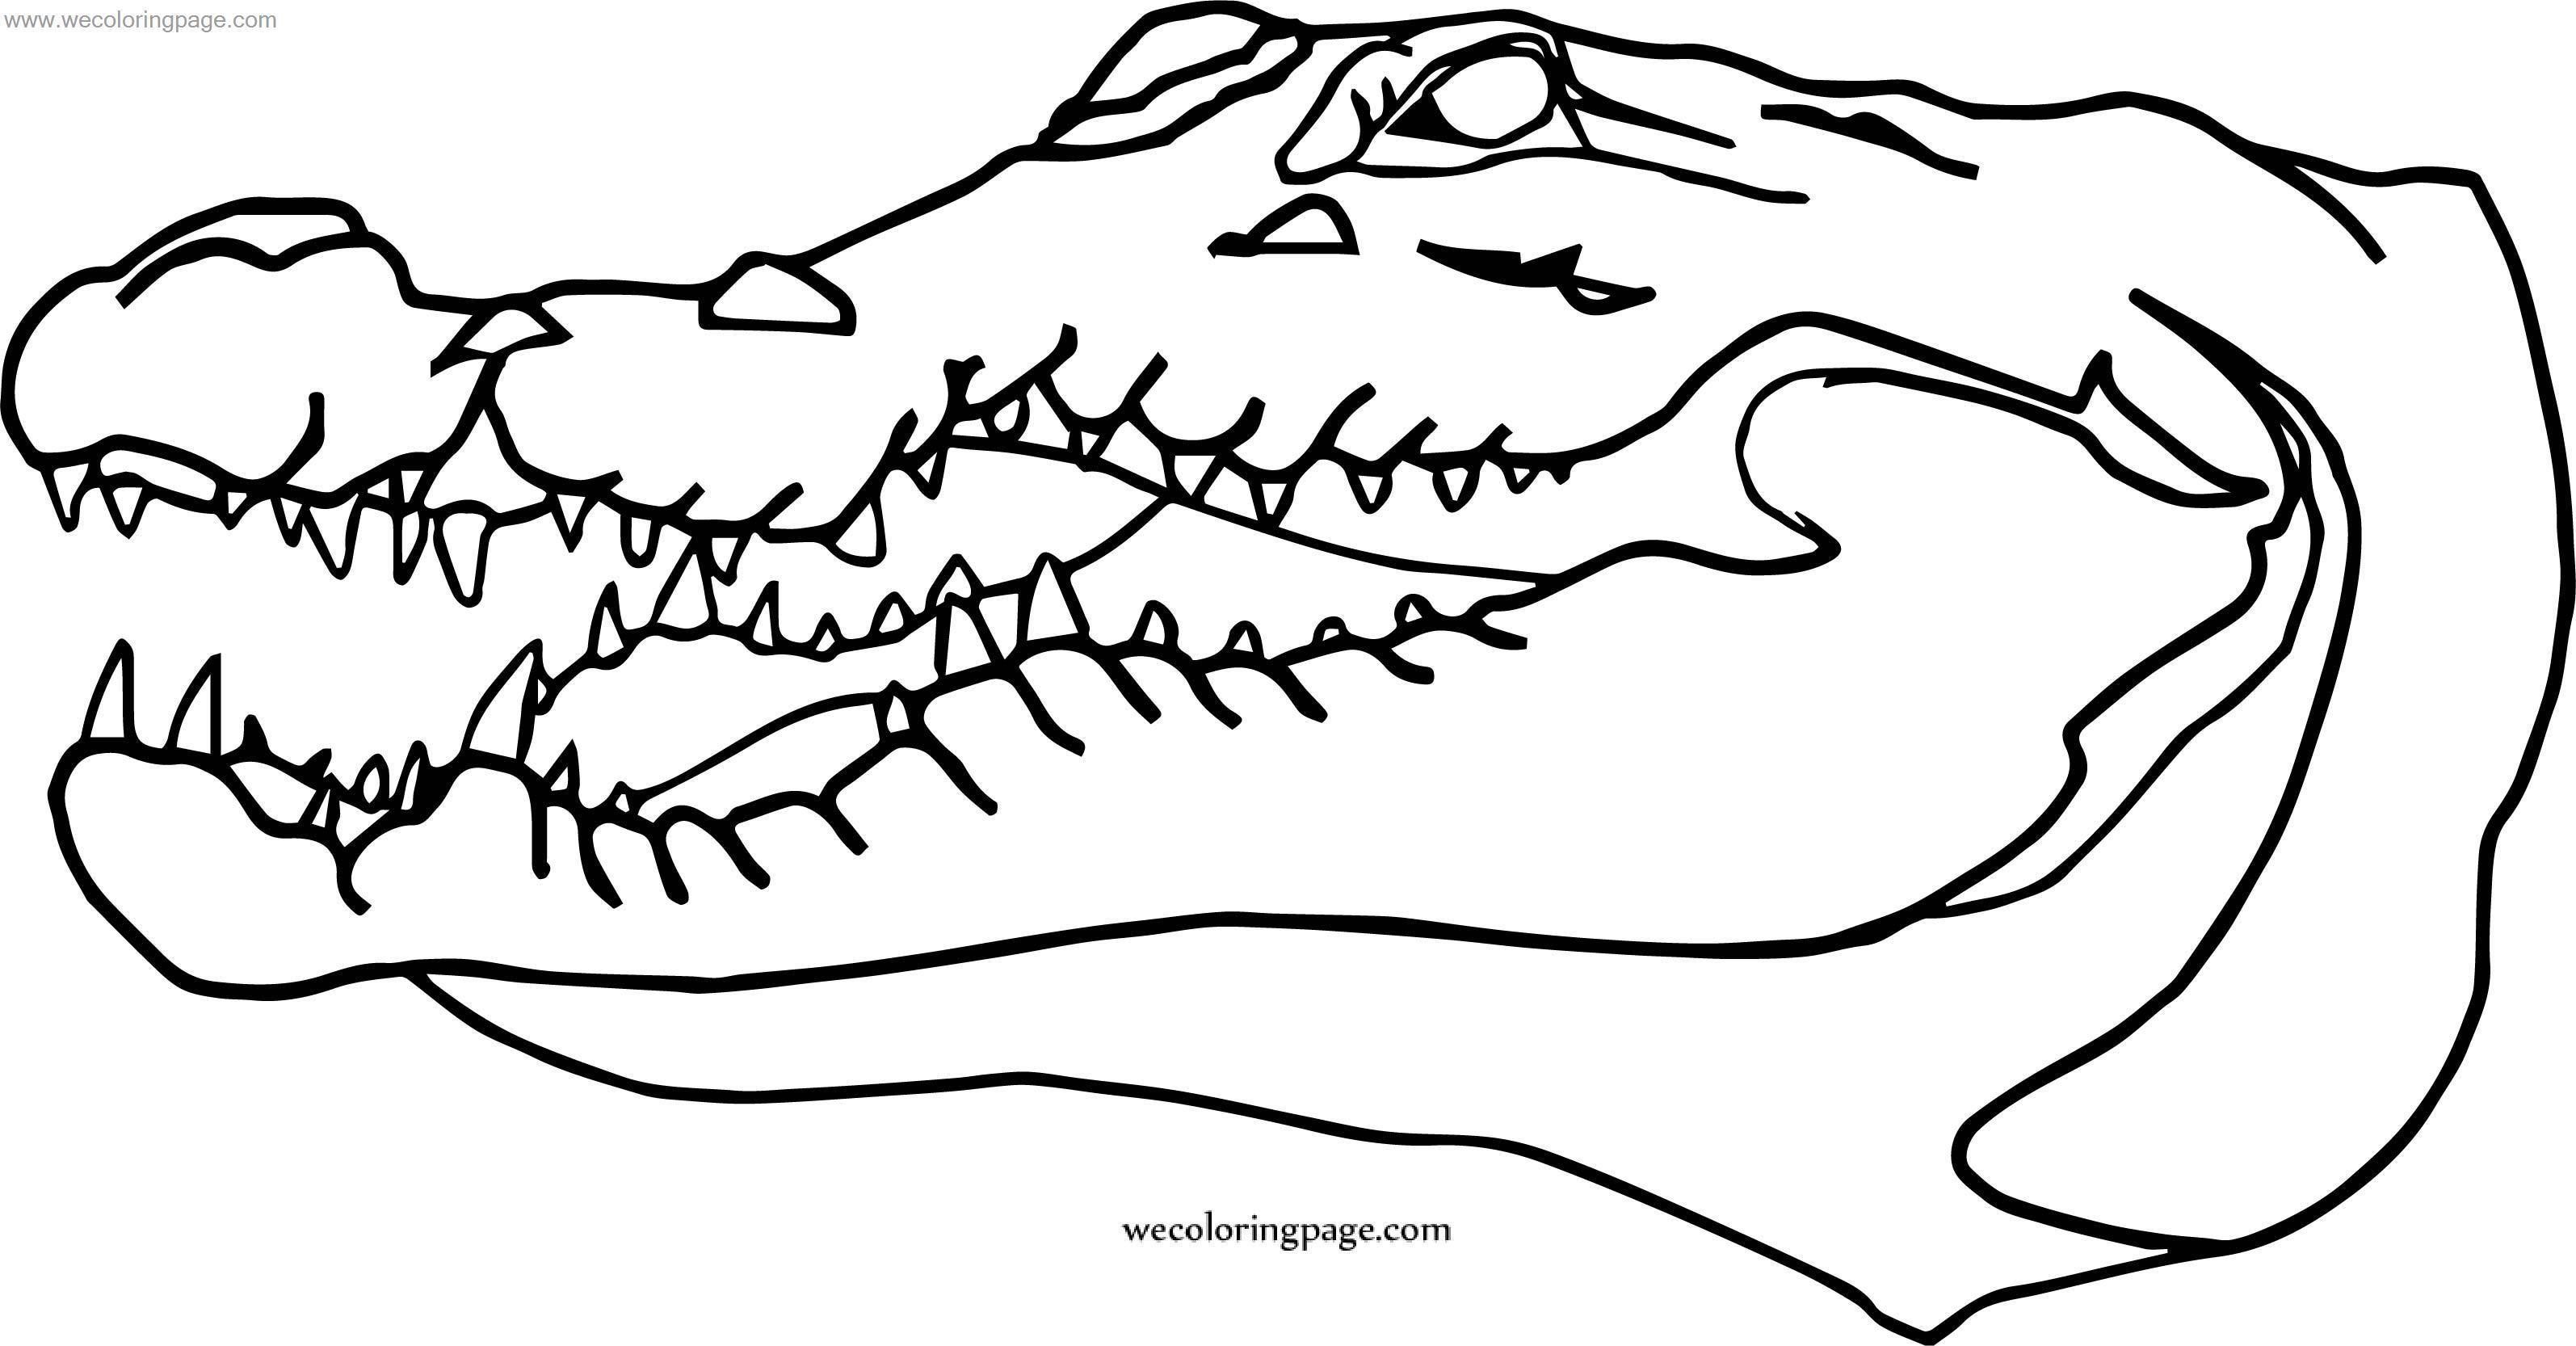 does-crocodile-alligator-coloring-page-wecoloringpage